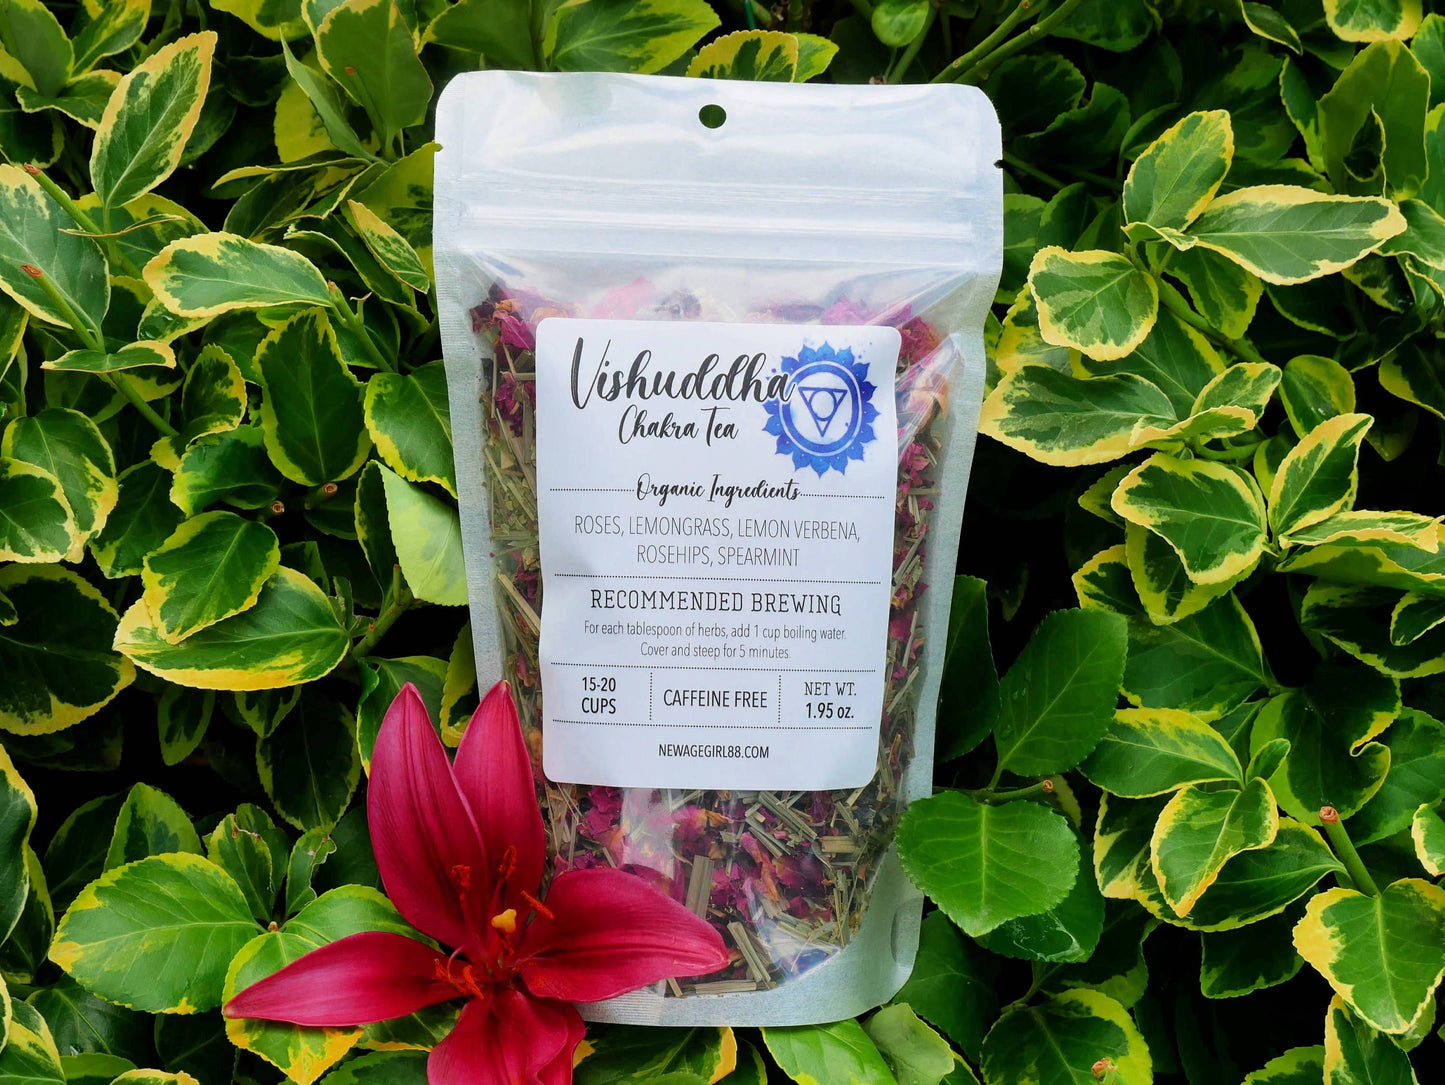 Vishuddha Chakra Organic Herbal Loose Tea